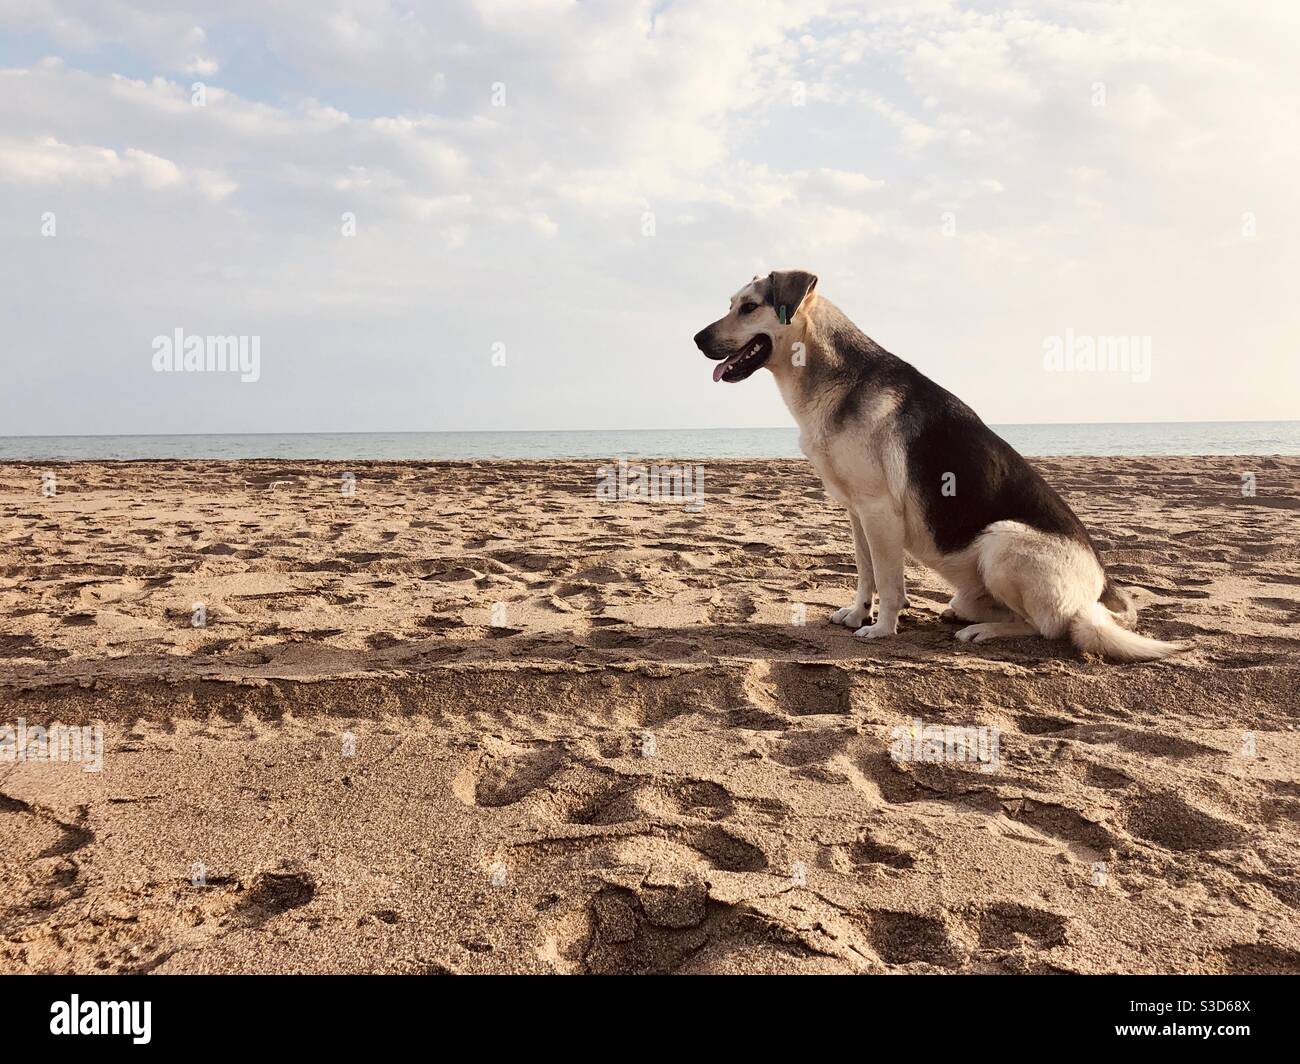 Street dog sitting on sandy beach Stock Photo